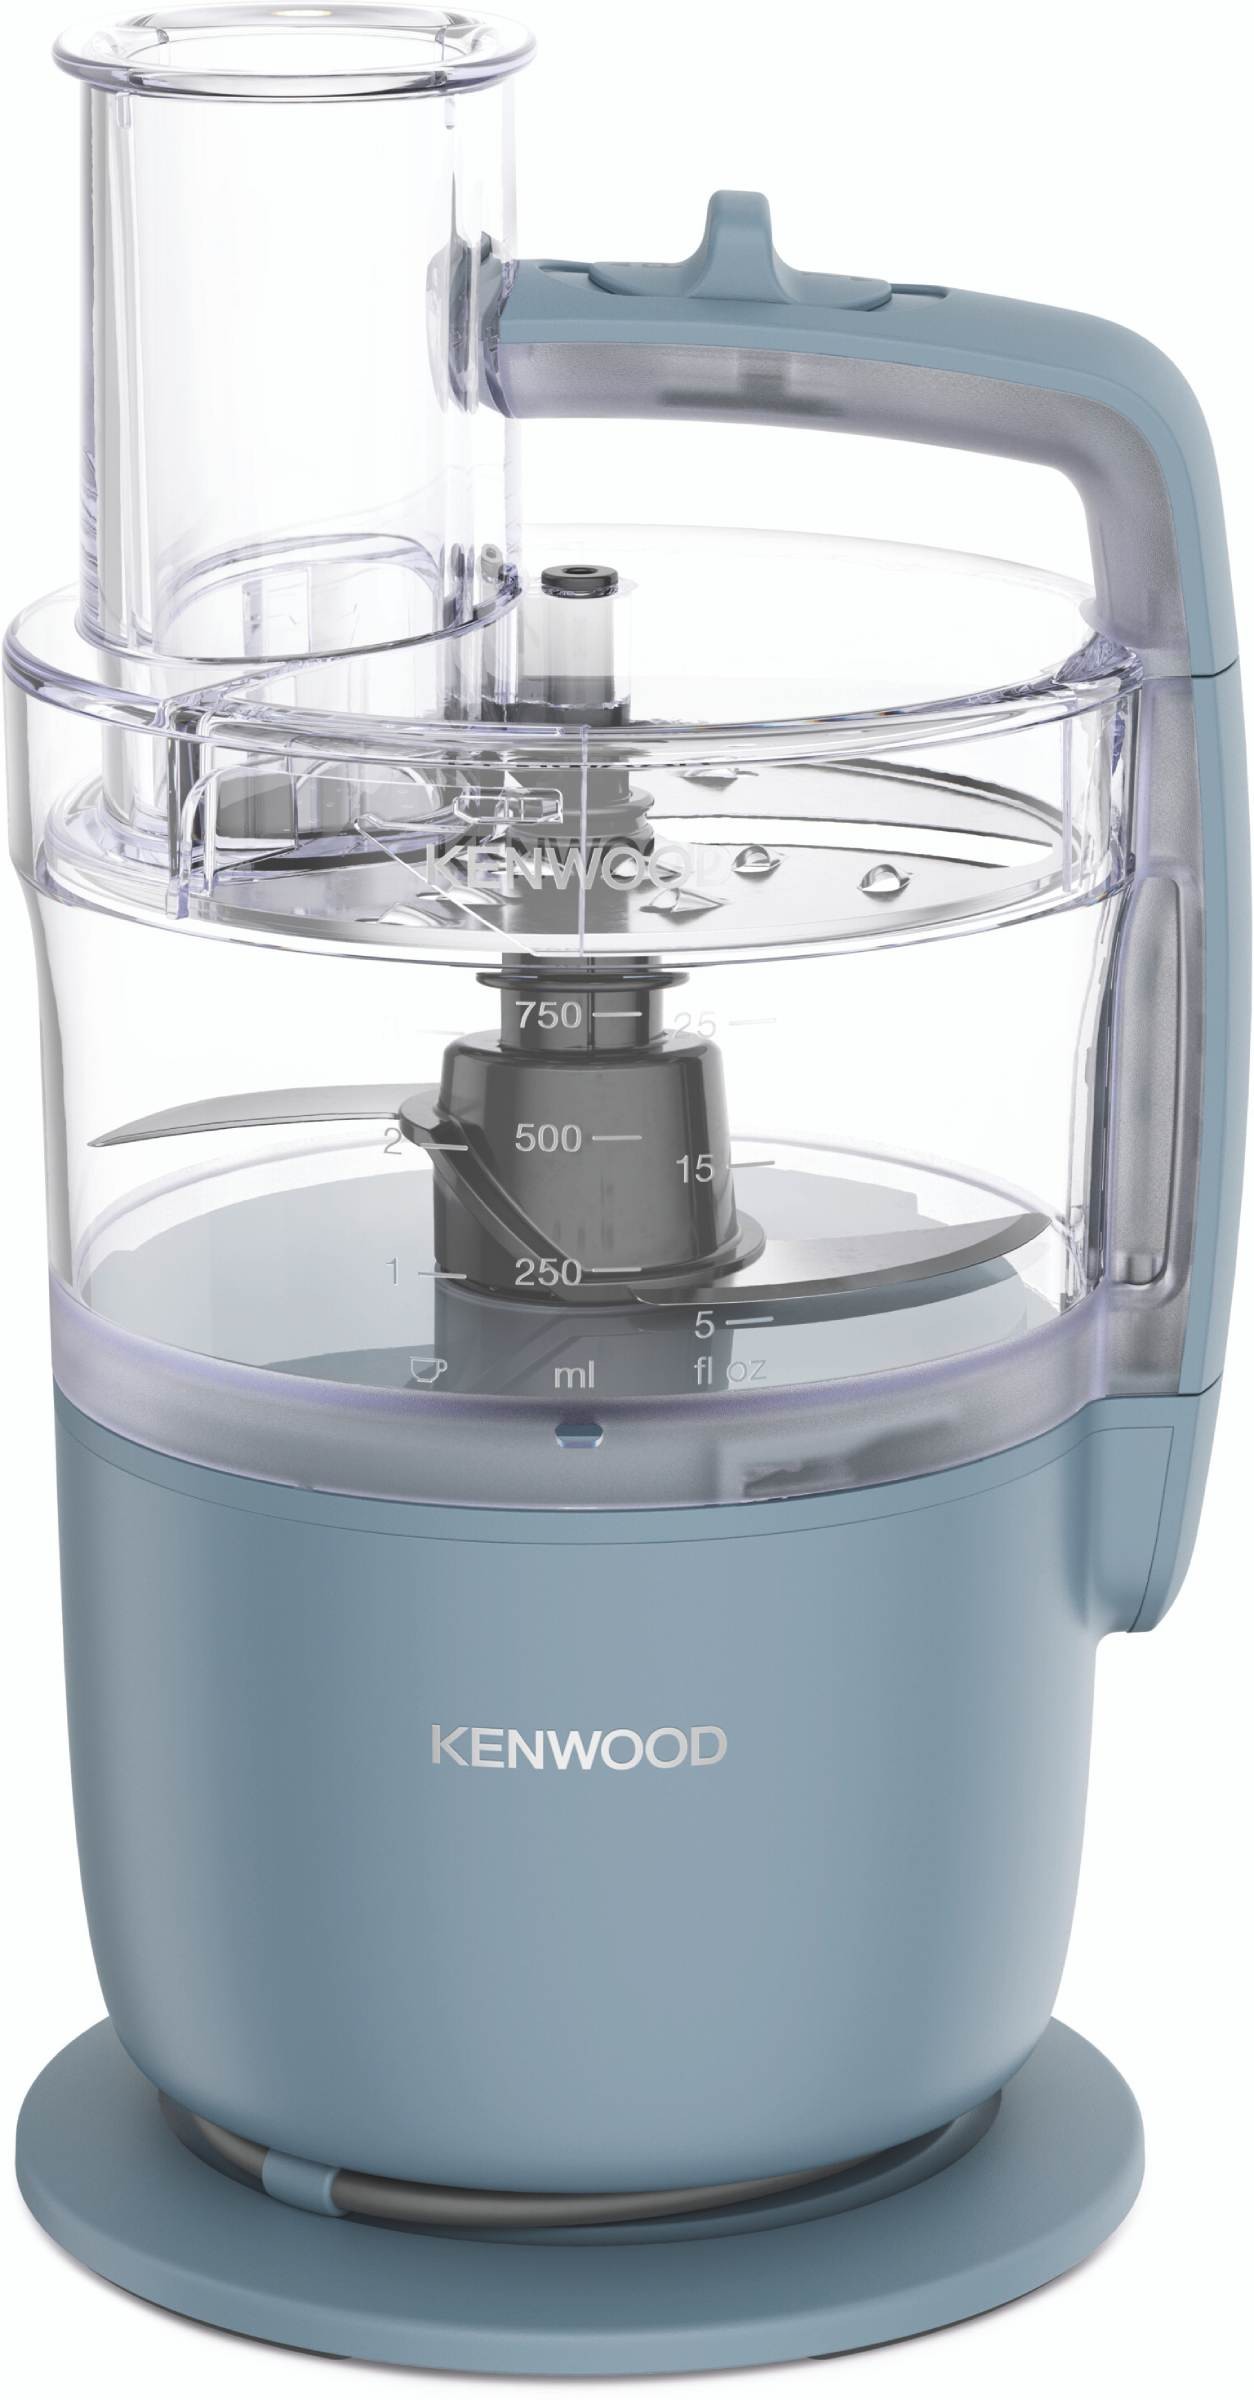 KENWOOD Robot culinaire MultiPro Go 650W 1.3L Gris Bleu - FDP22130GY